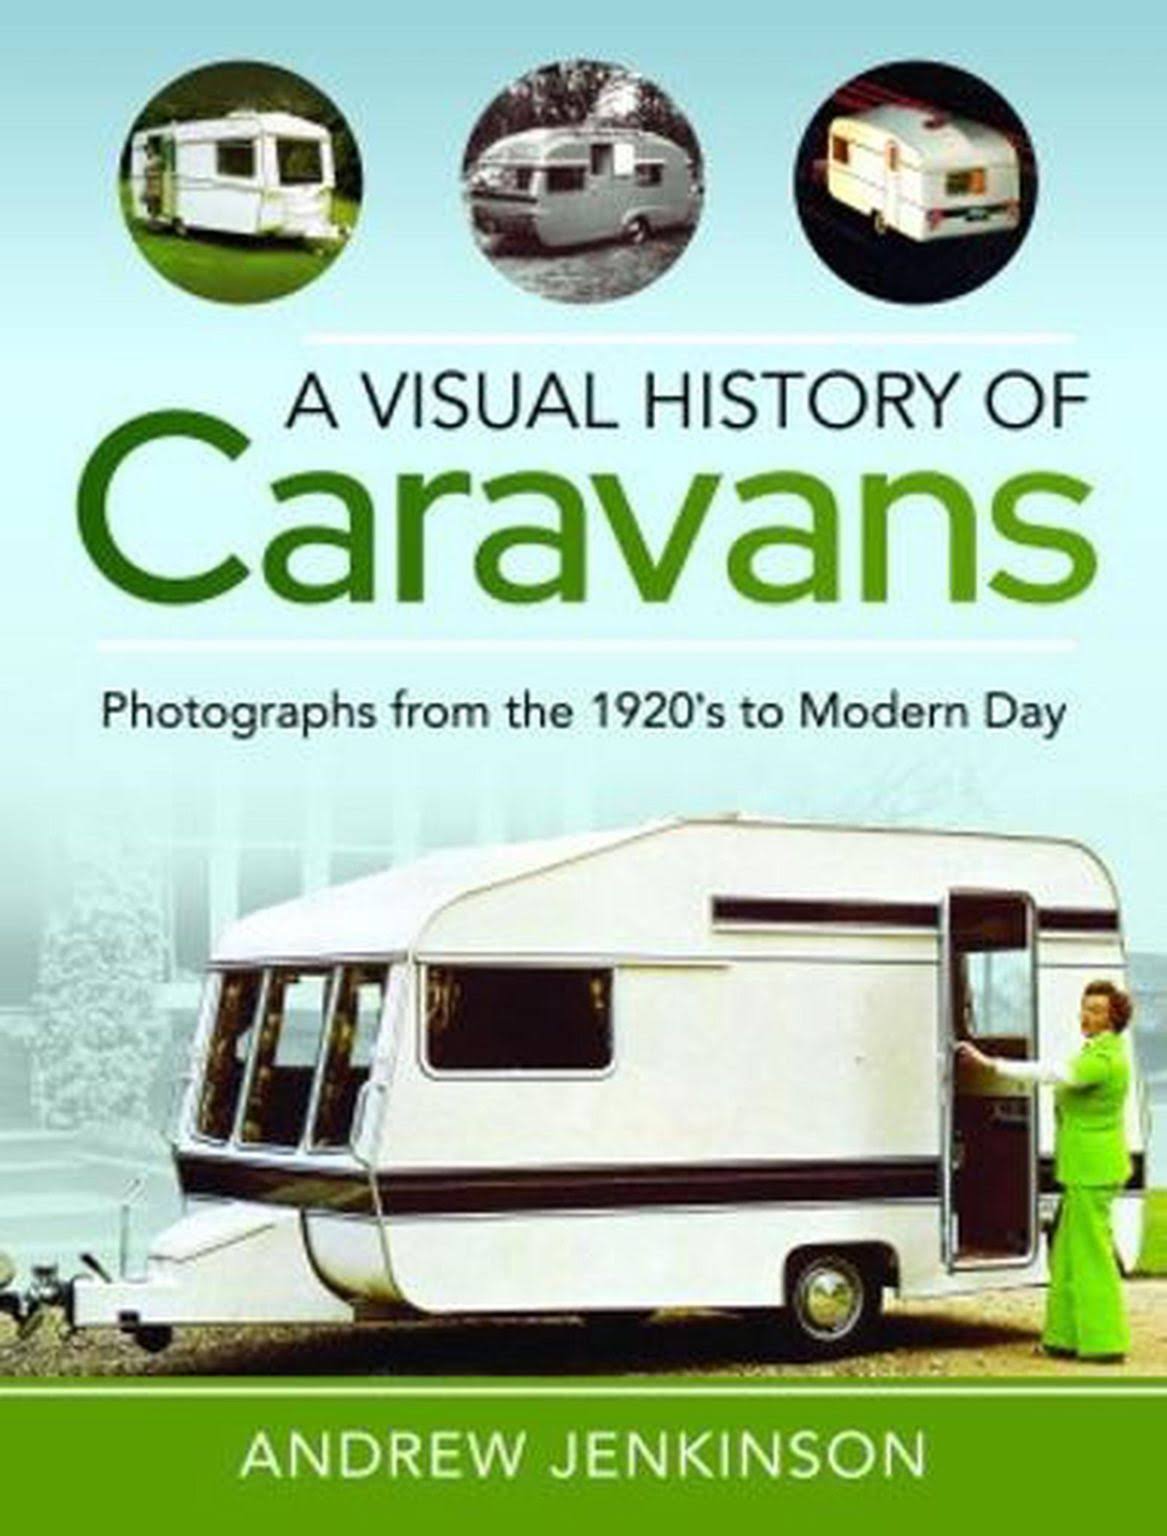 Visual History of Caravans by Andrew Jenkinson